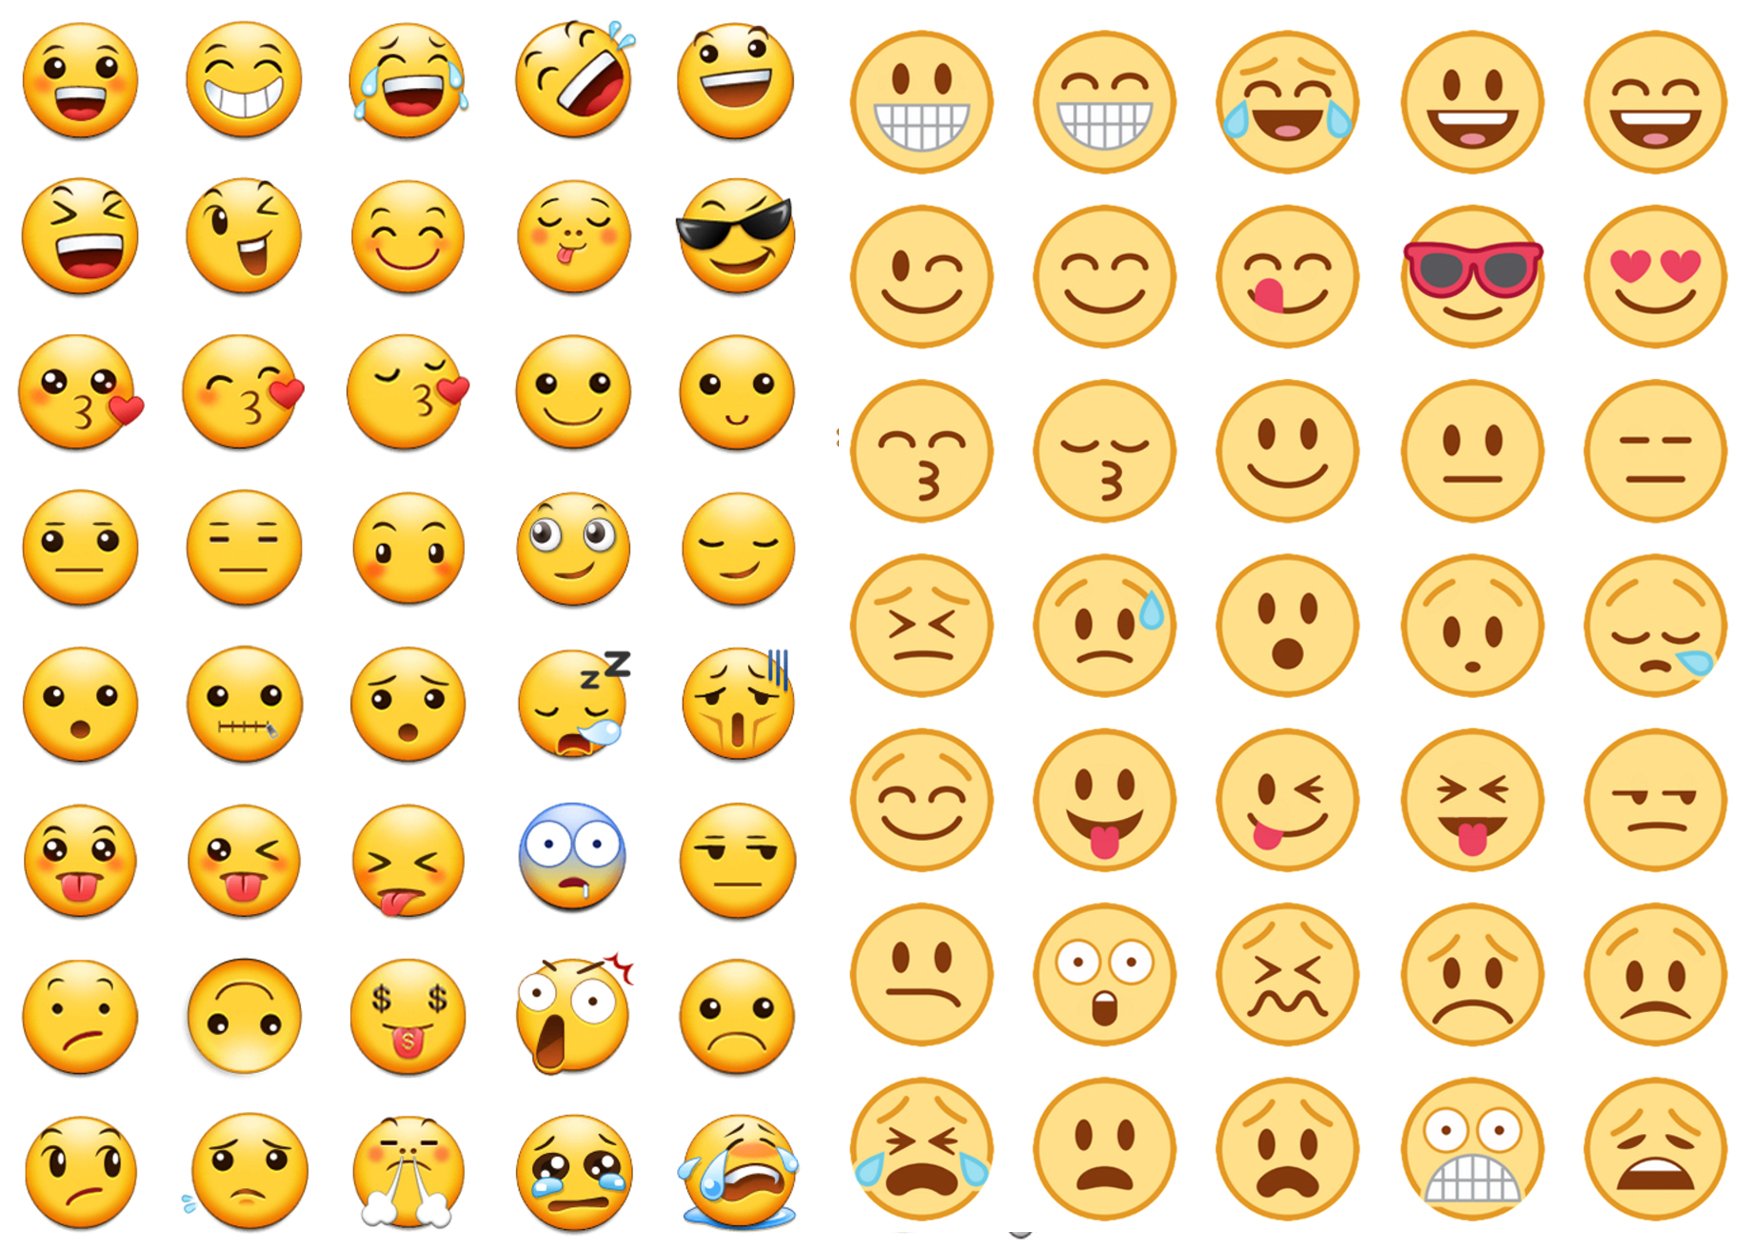 Android 10 Samsung Emojis